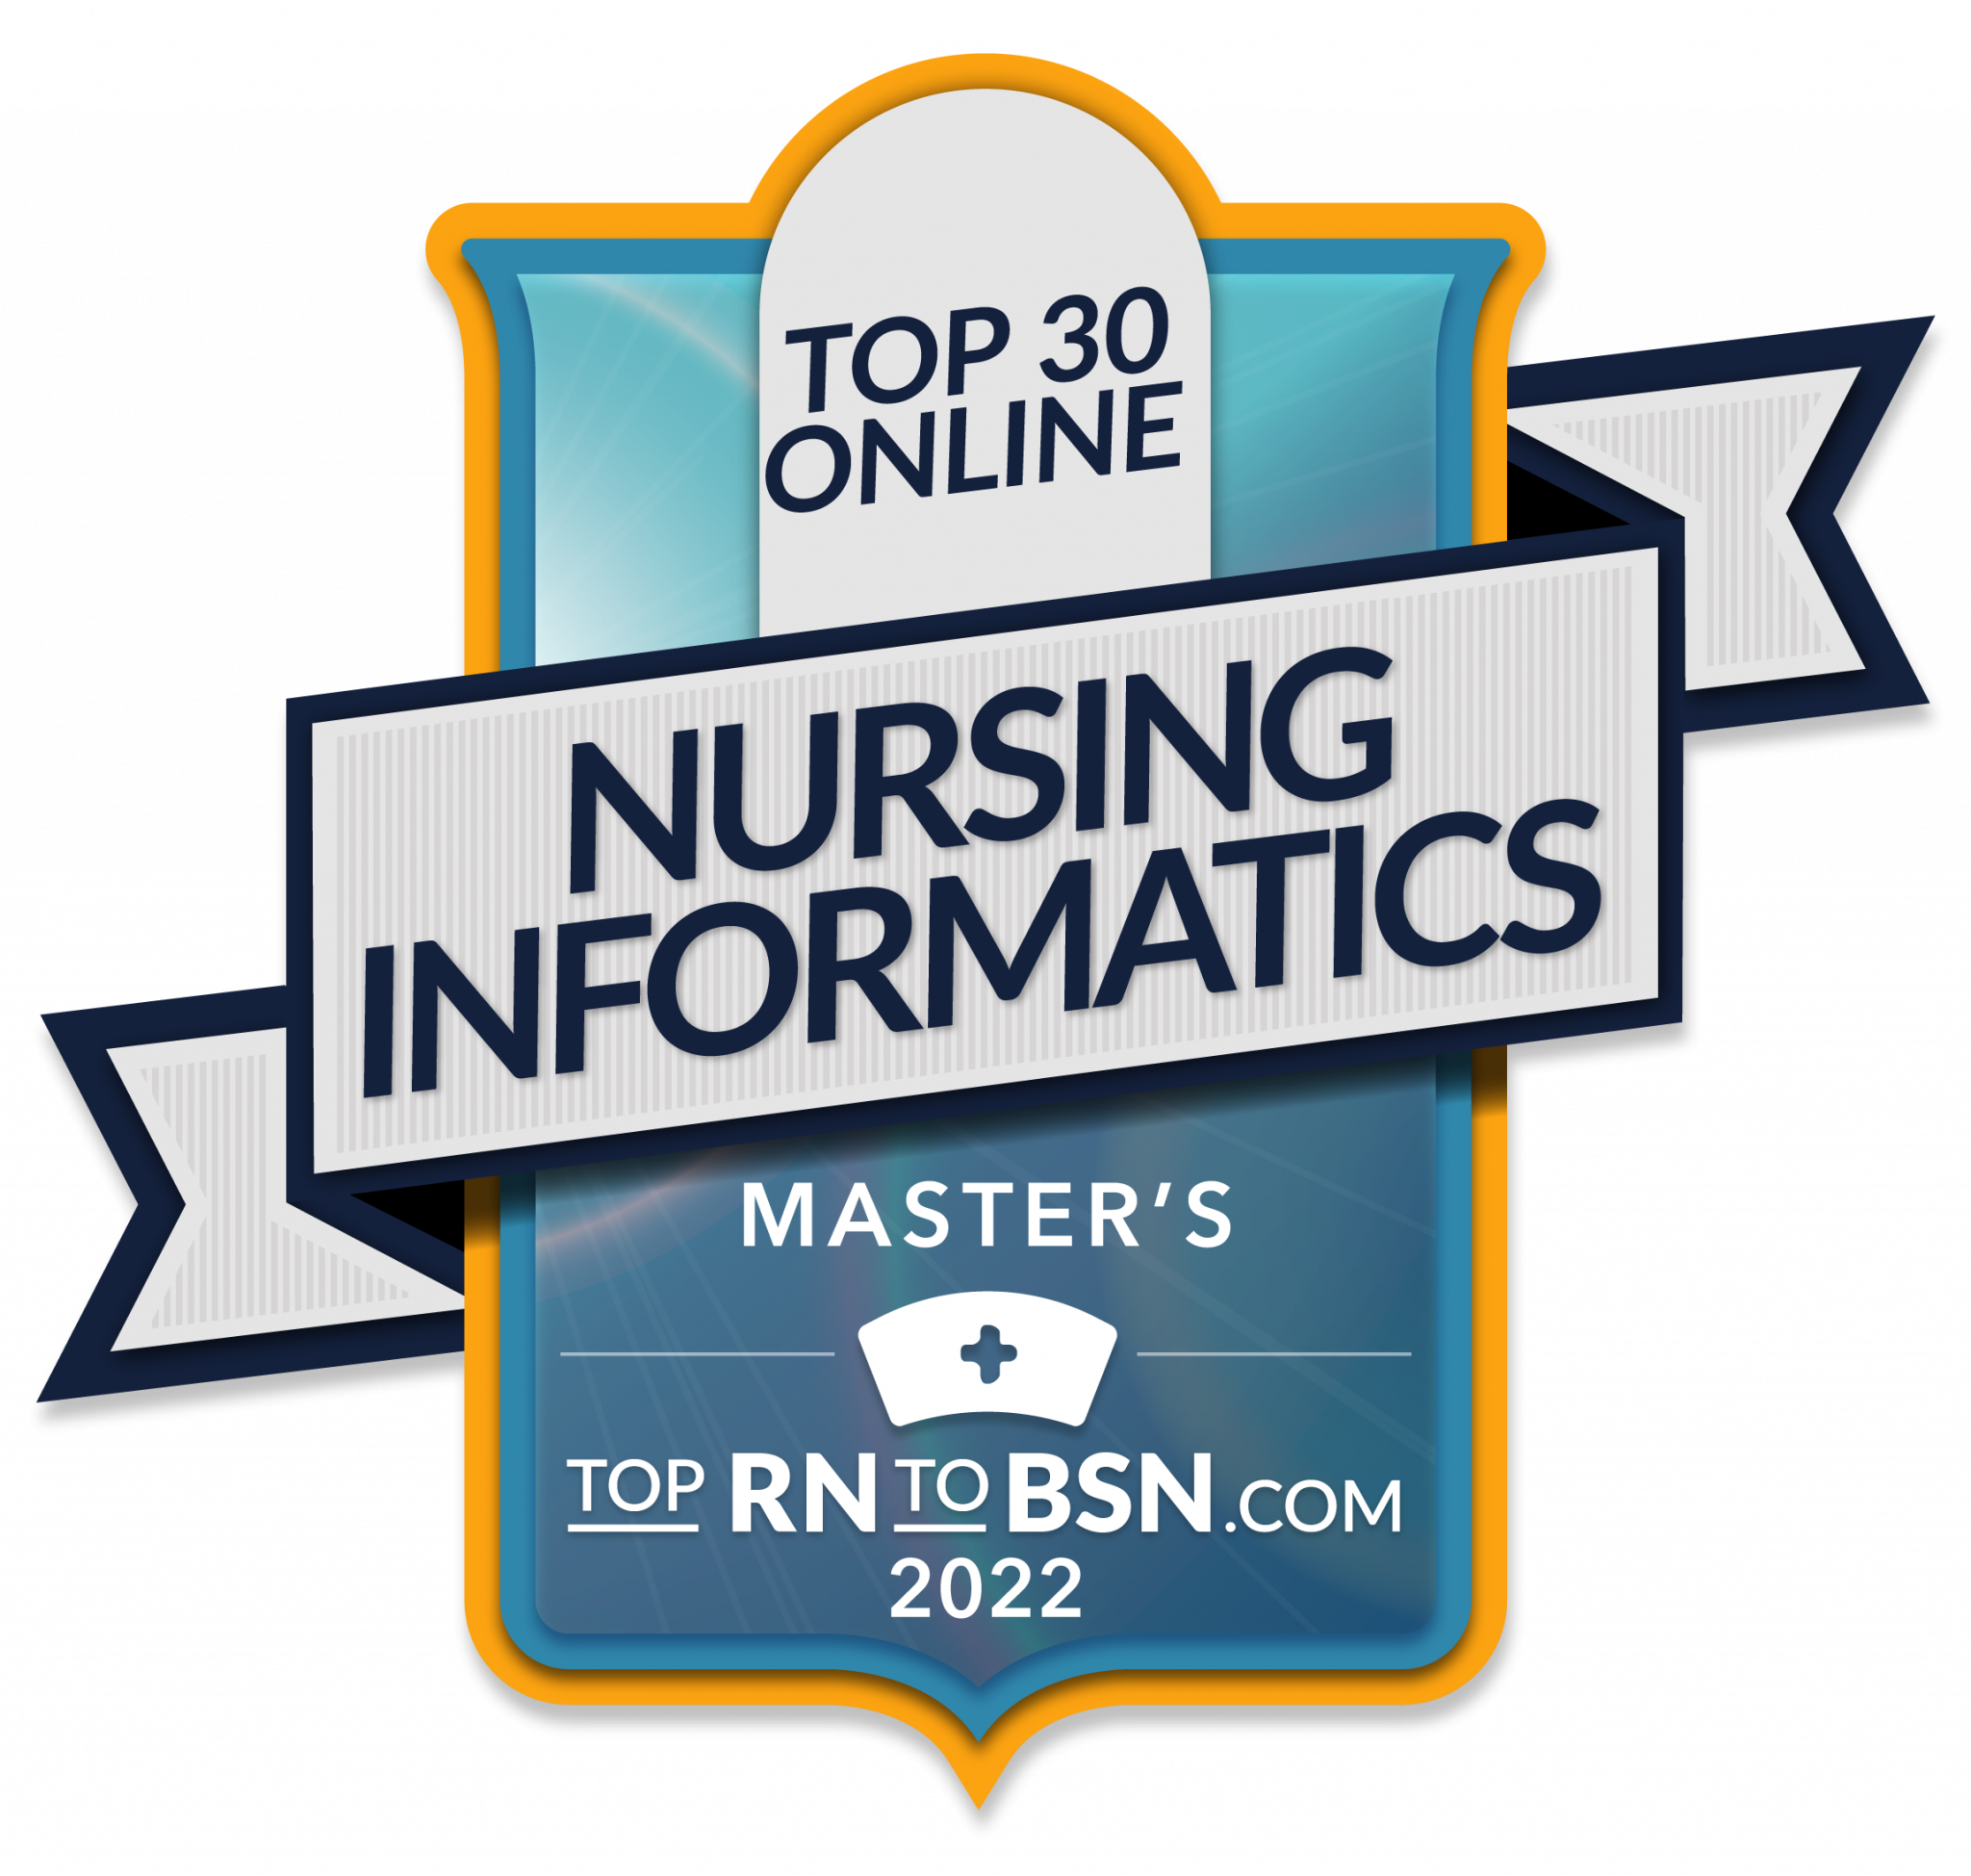 masters in nursing informatics programs online